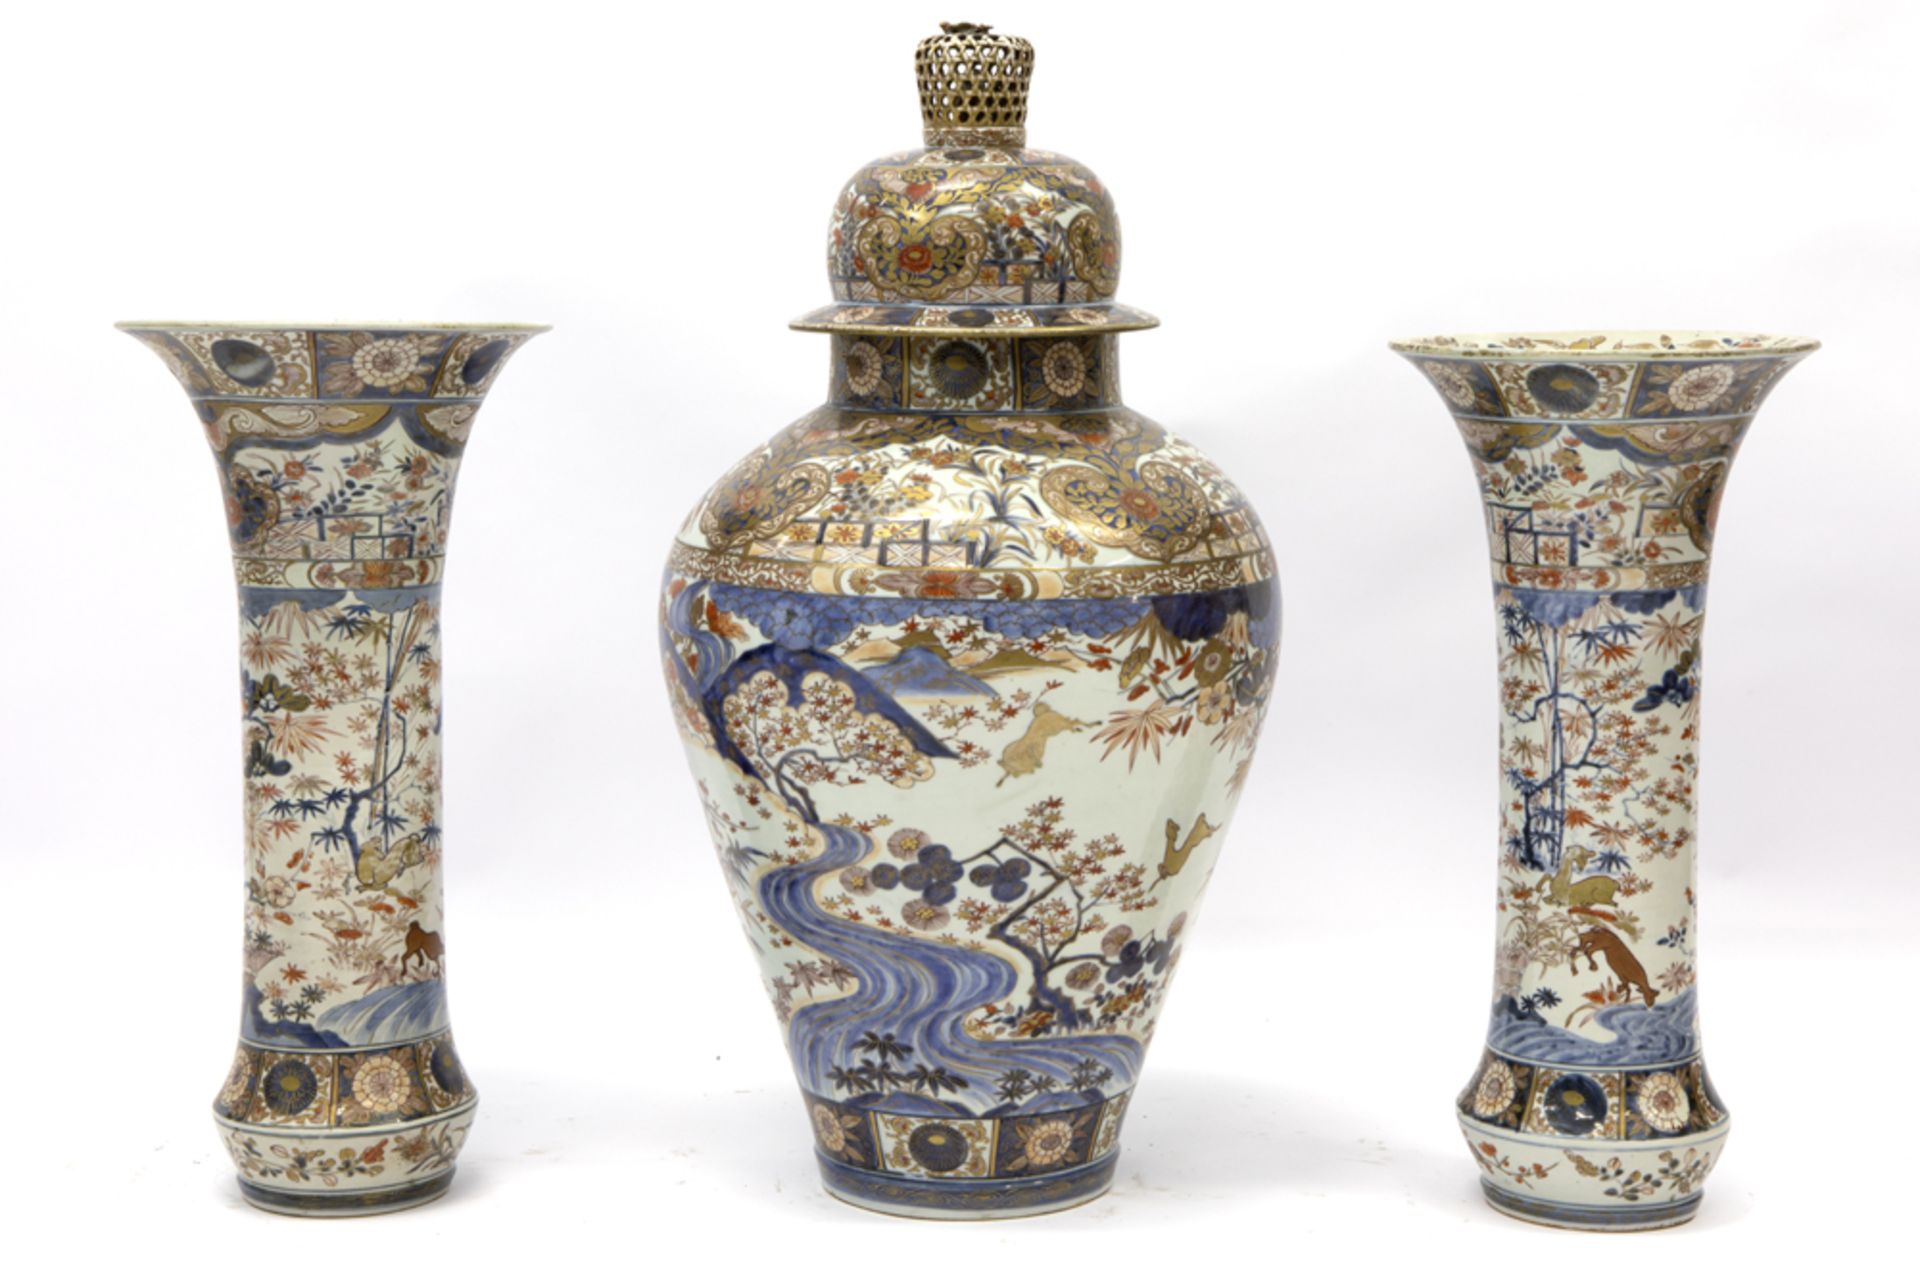 antique imposing 3pc garniture in porcelain with a fine Imari decor : a pair of vases and a vase - Bild 2 aus 5